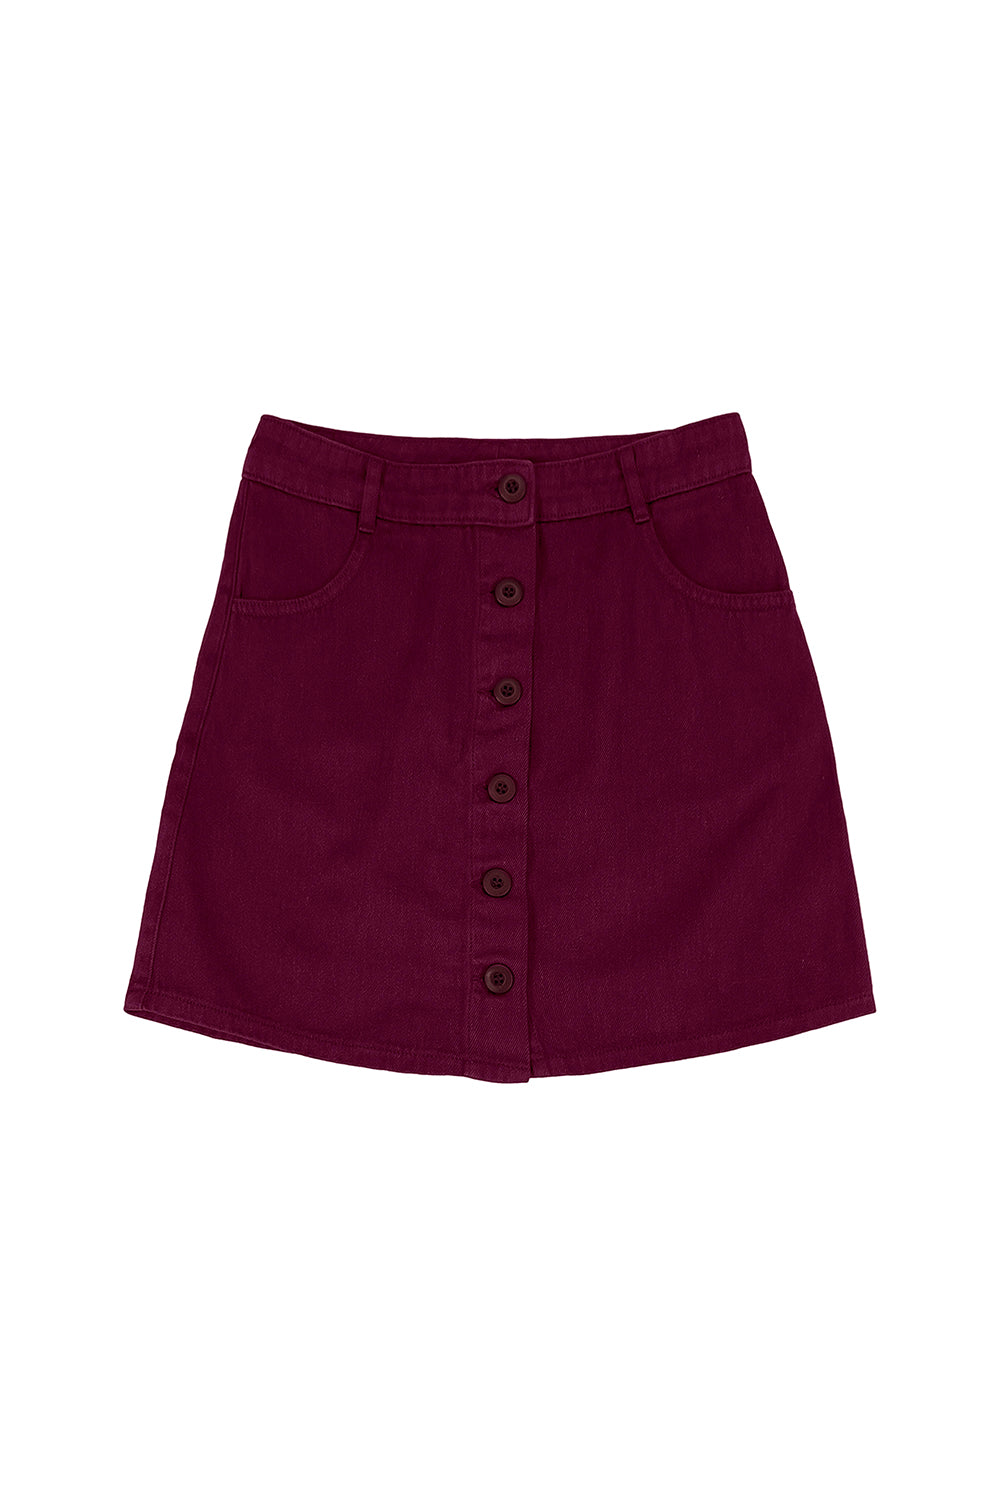 Vassar Skirt | Jungmaven Hemp Clothing & Accessories / Color: Burgundy